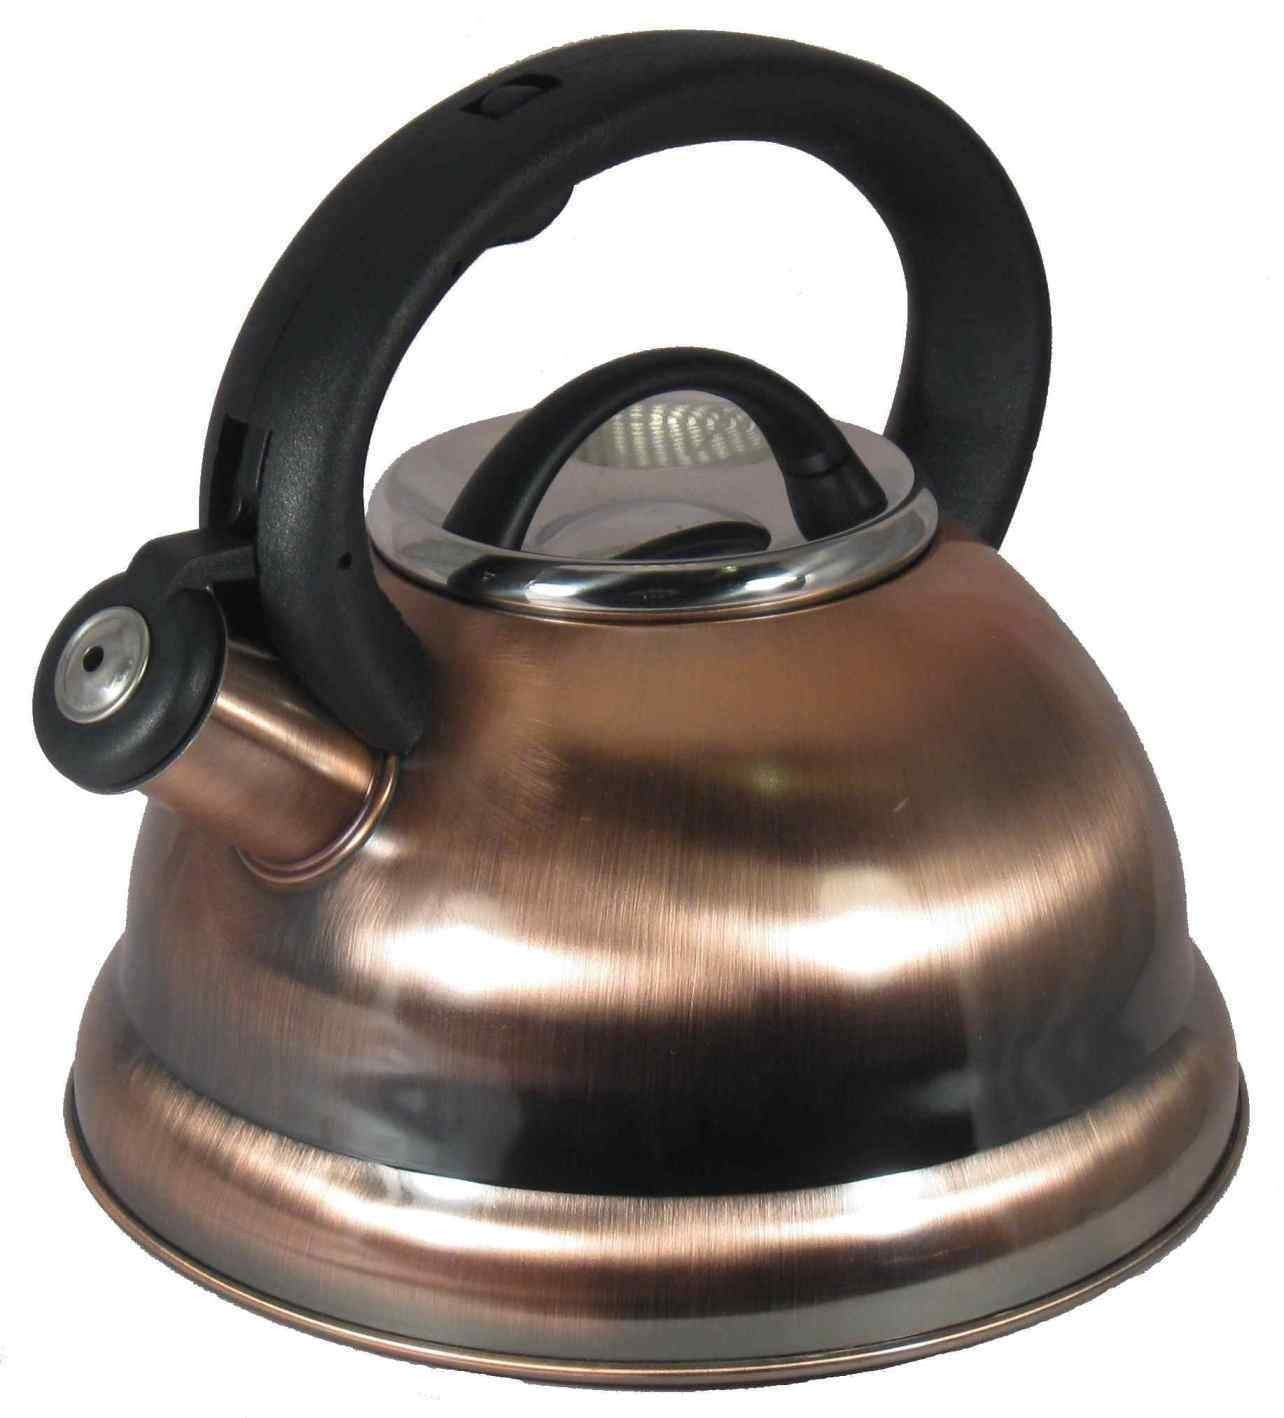 Antique Copper Stainless Steel Whistling Tea Kettle Tea Maker Pot 3 Quarts 2.8 L